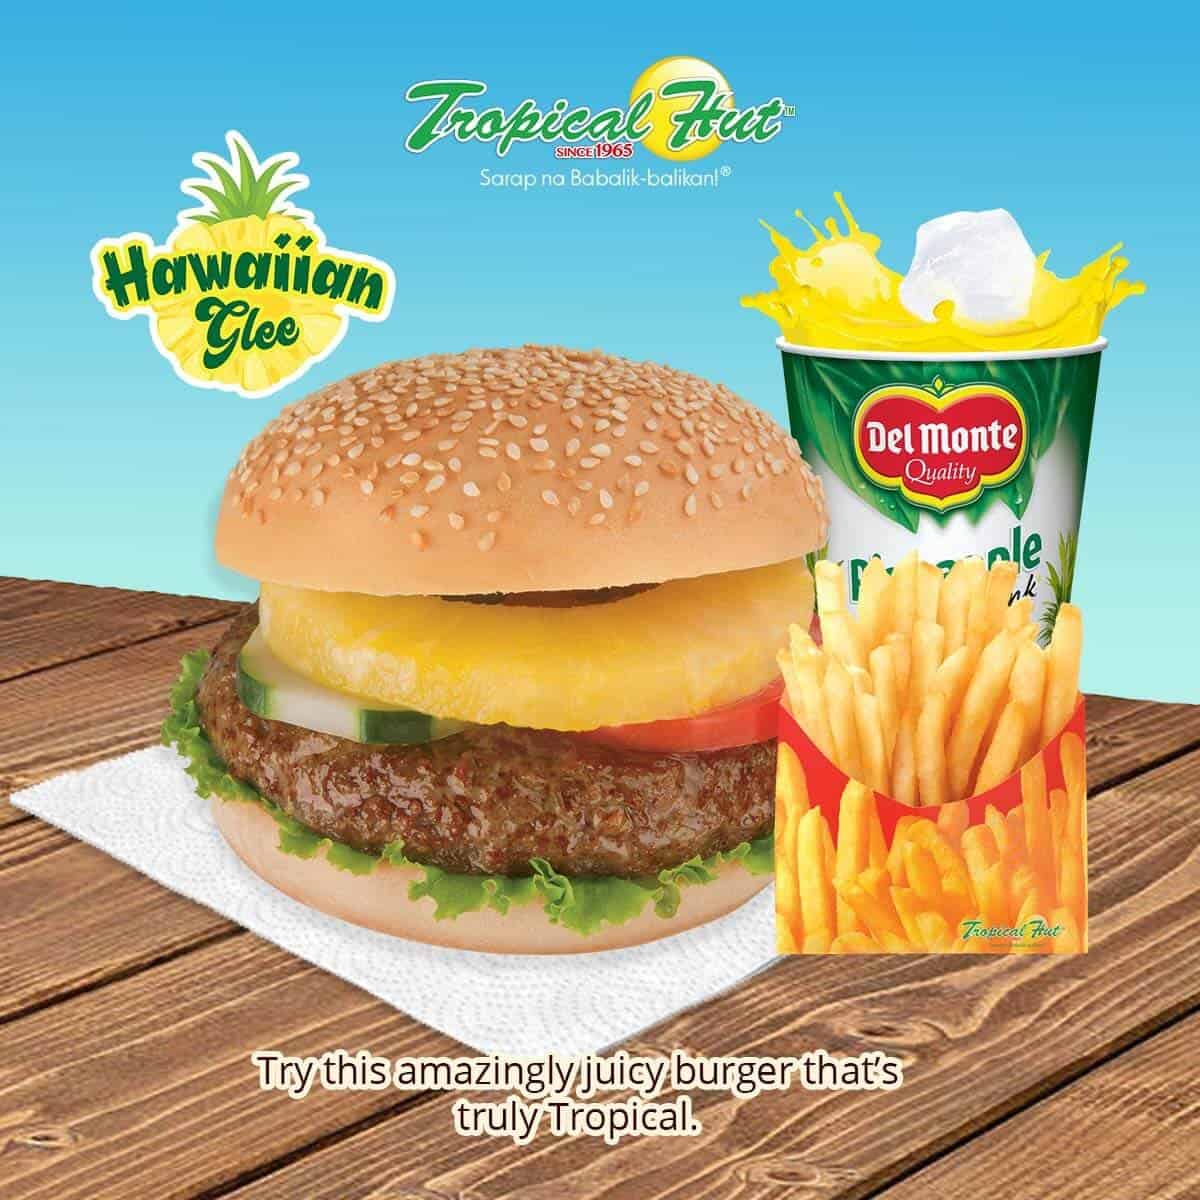 Delicious Hamburger on Tropical Hut Menu Philippines